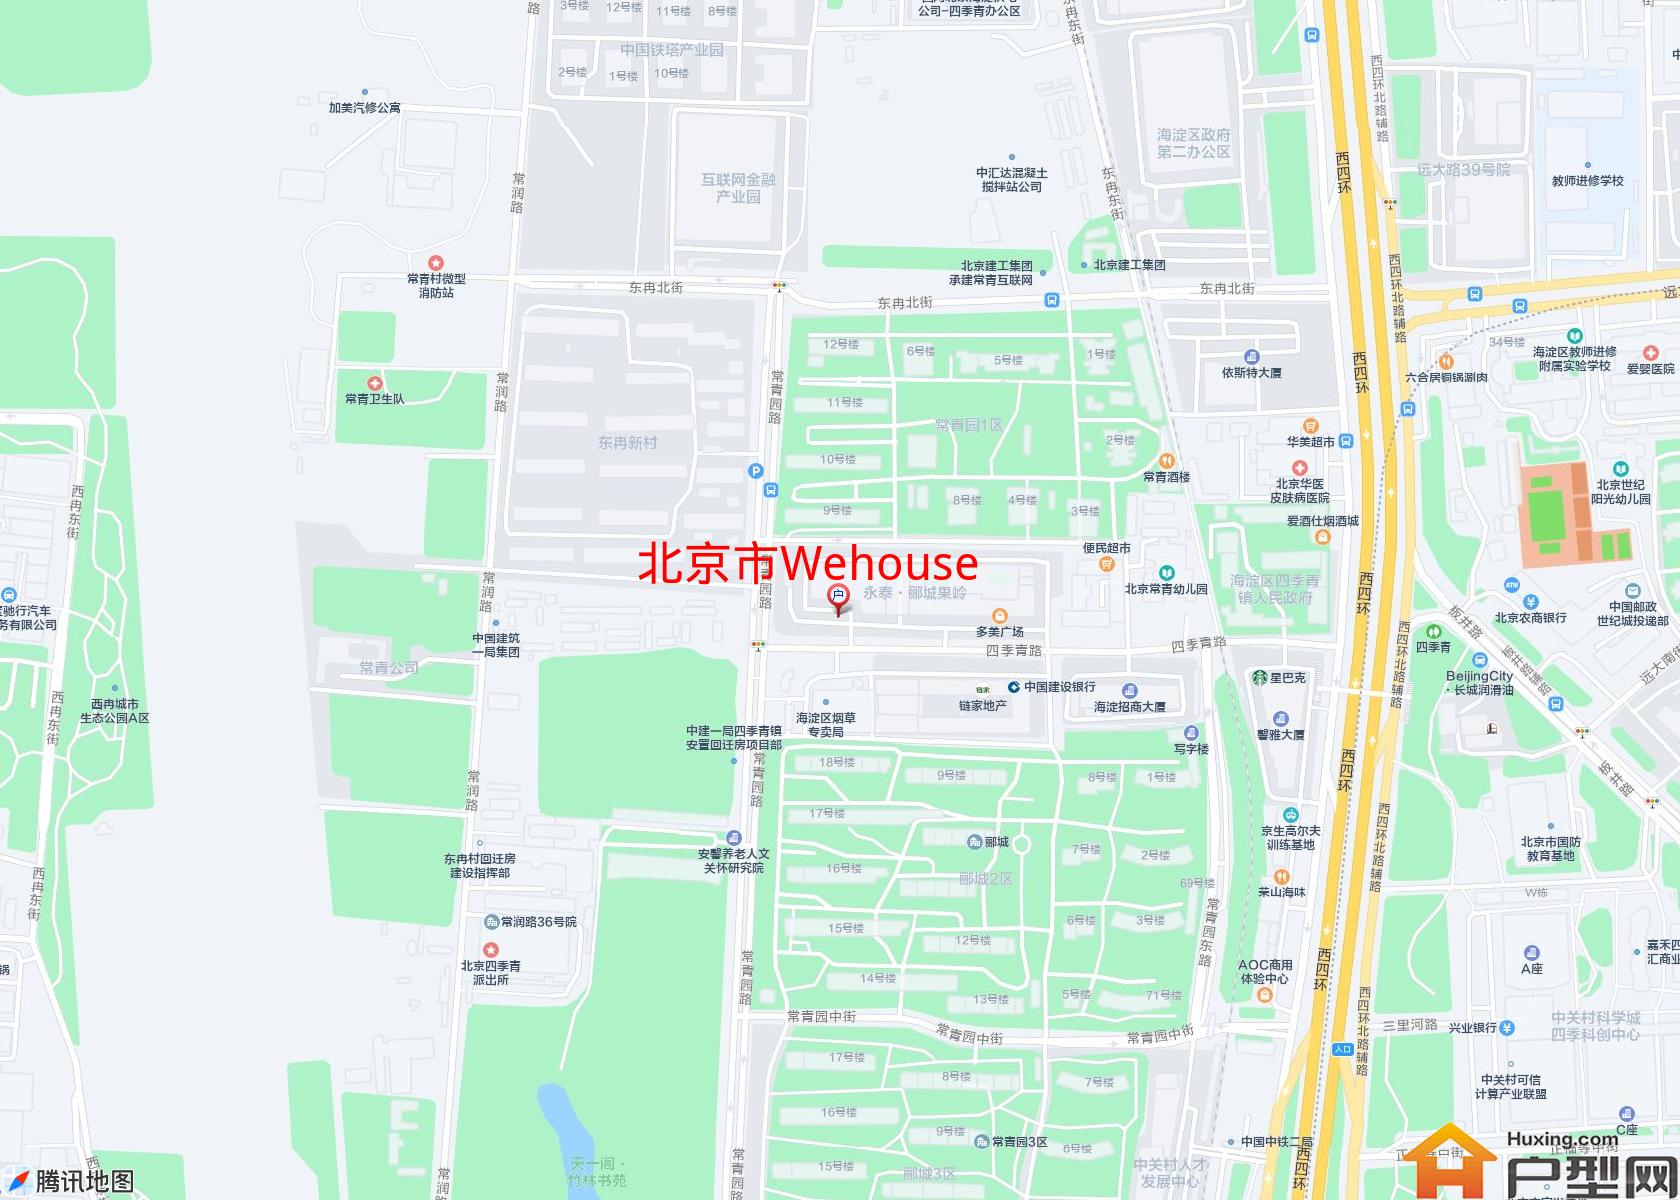 Wehouse小区 - 户型网